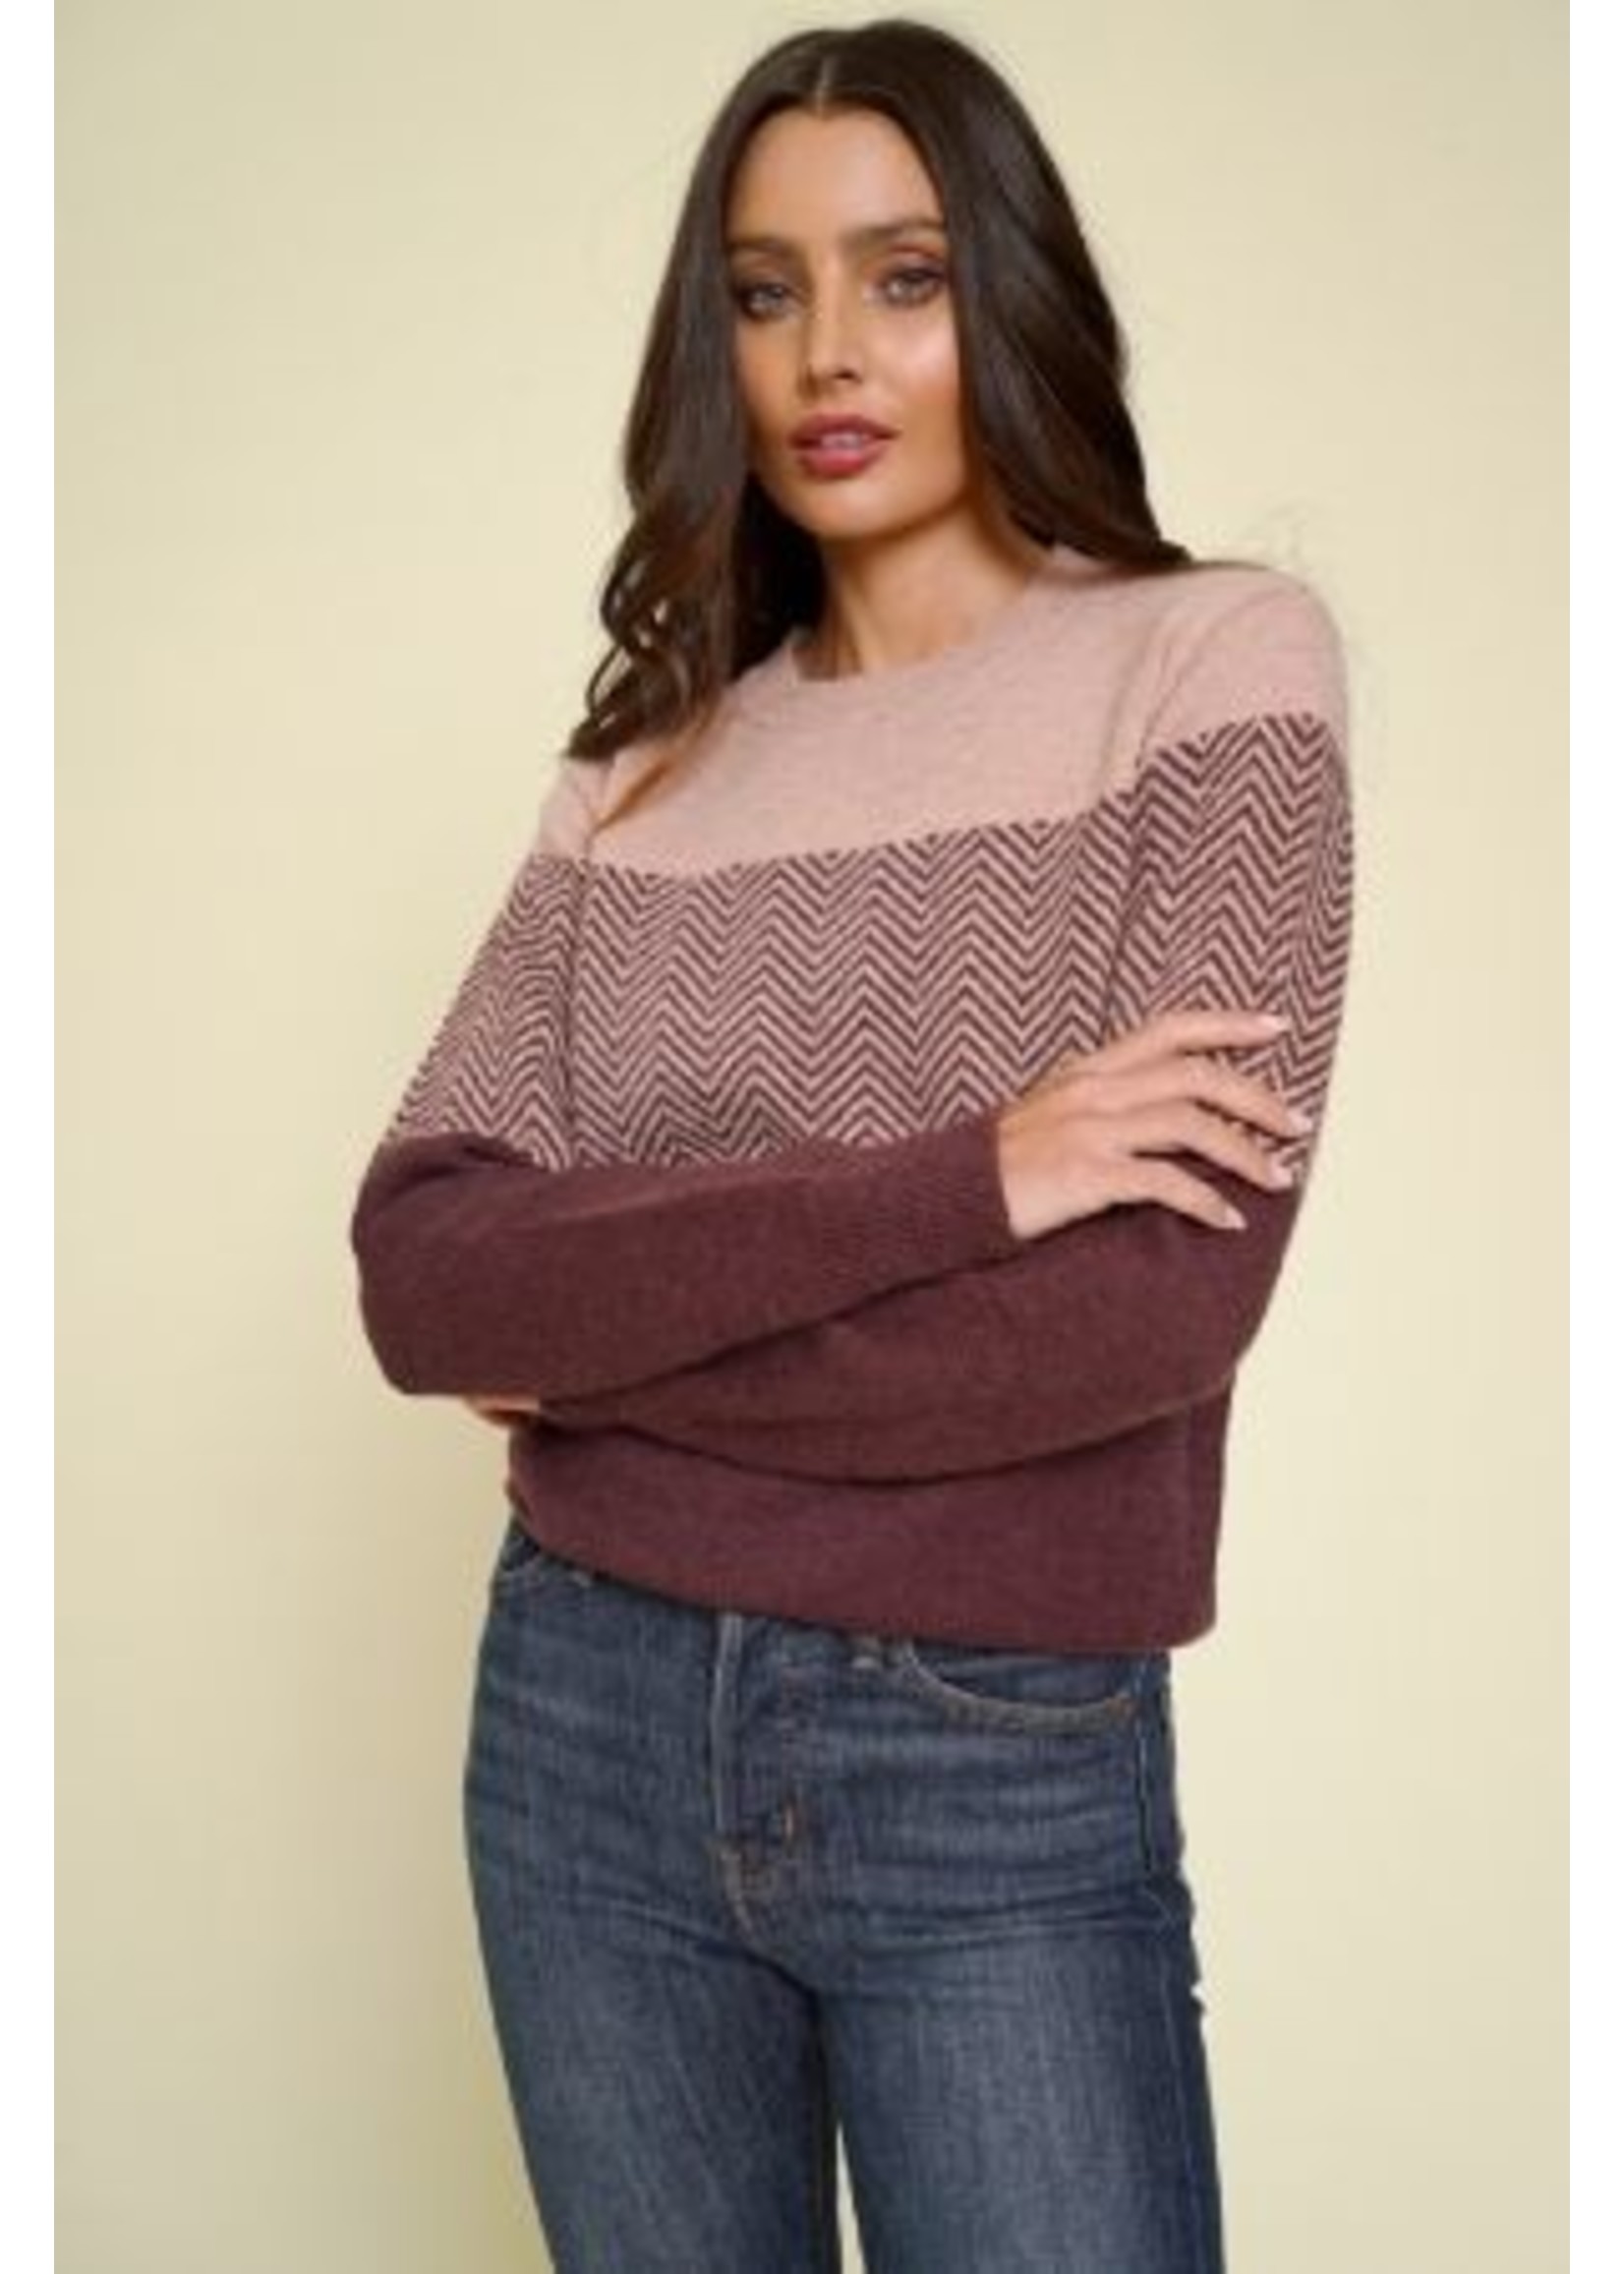 Plum chevron Sweater